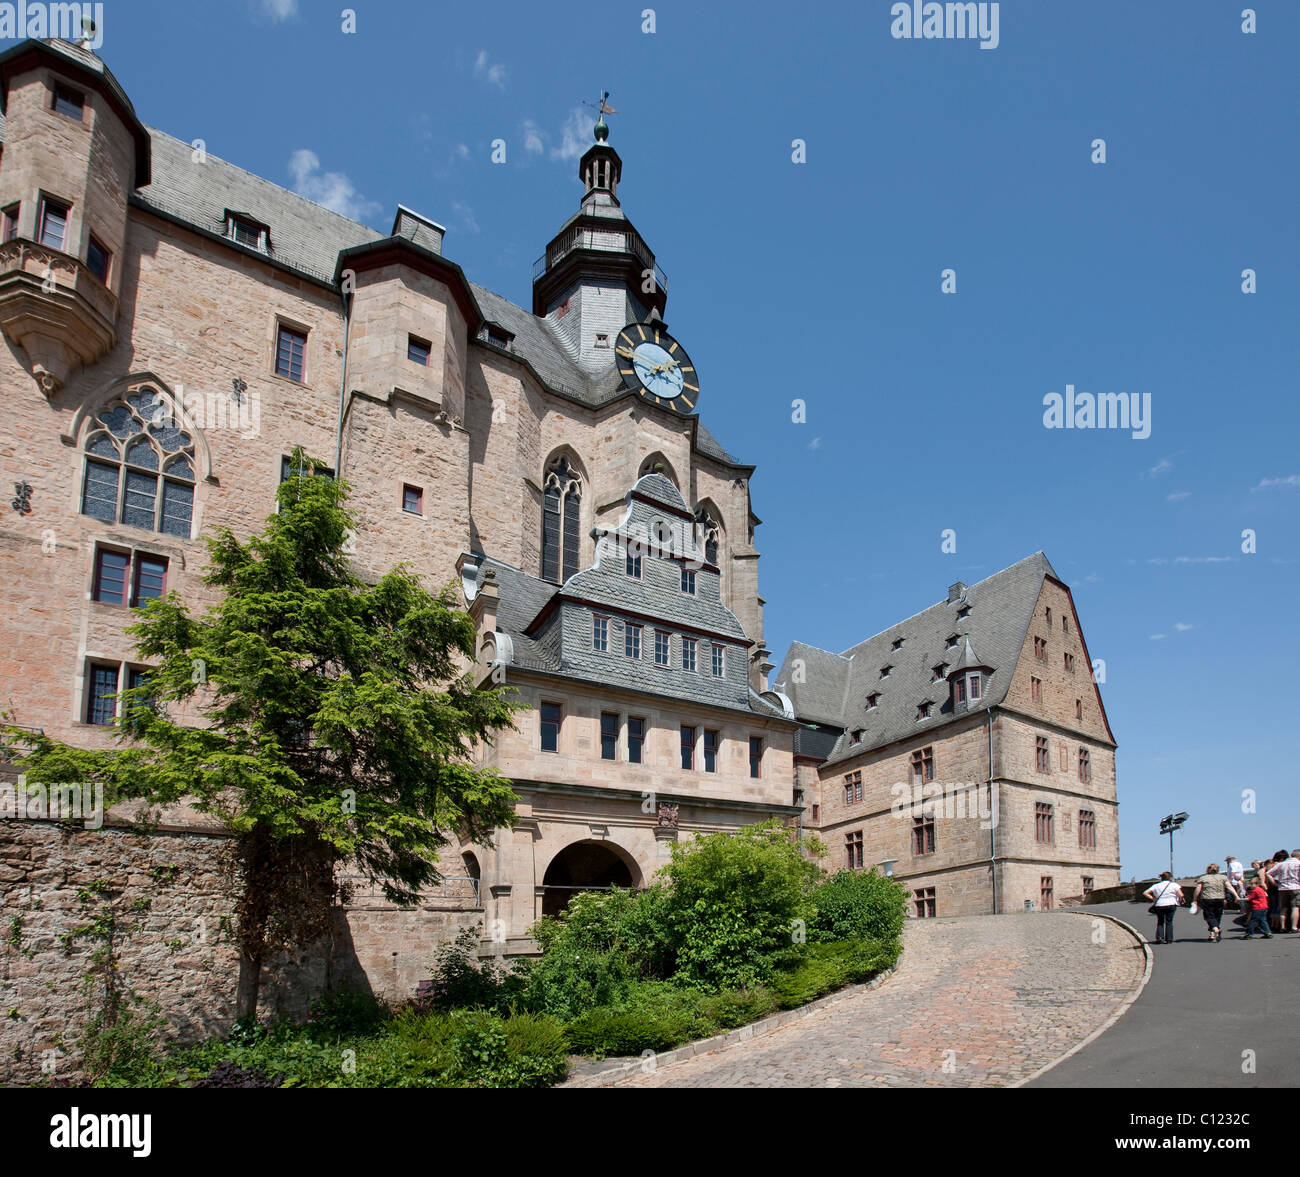 The Marburger Schloss castle, Marburg, Hessen, Germany, Europe Stock Photo